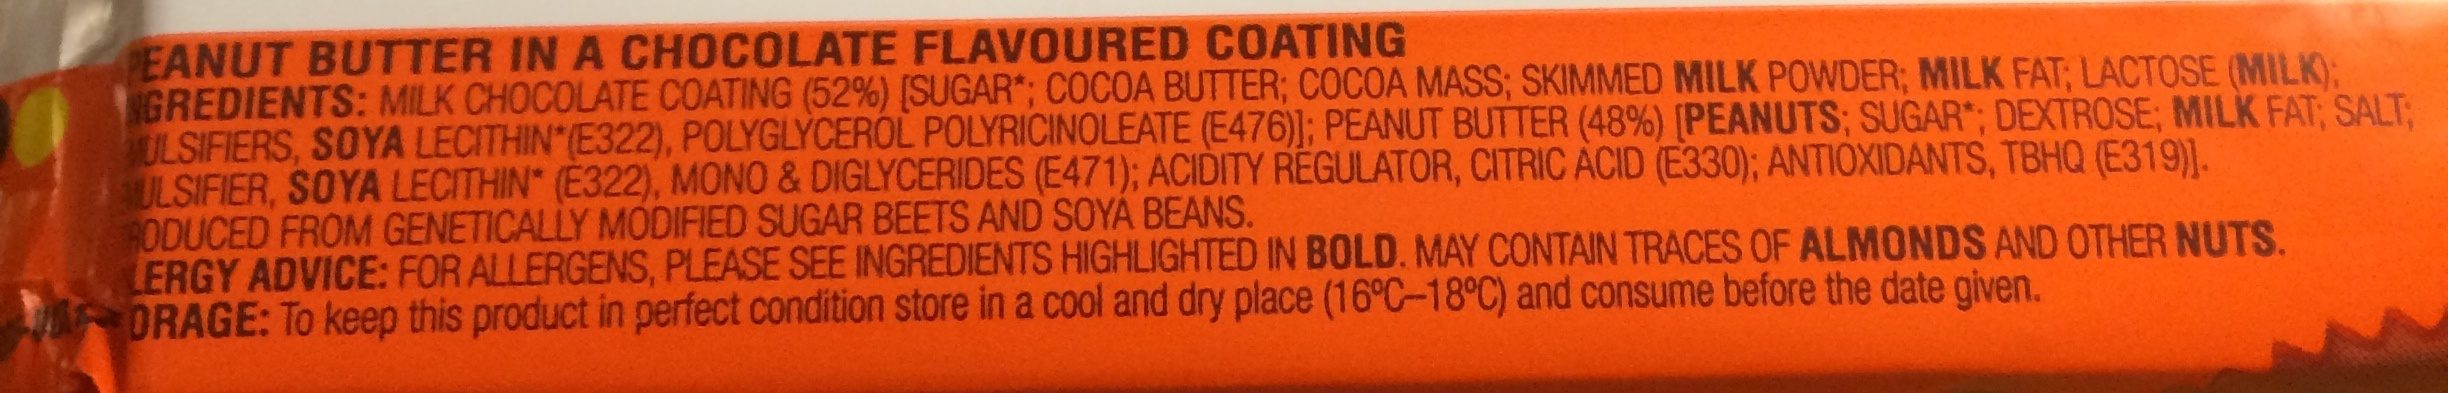 Reese's Peanut Butter Cups 4er King Size - Ingredients - en